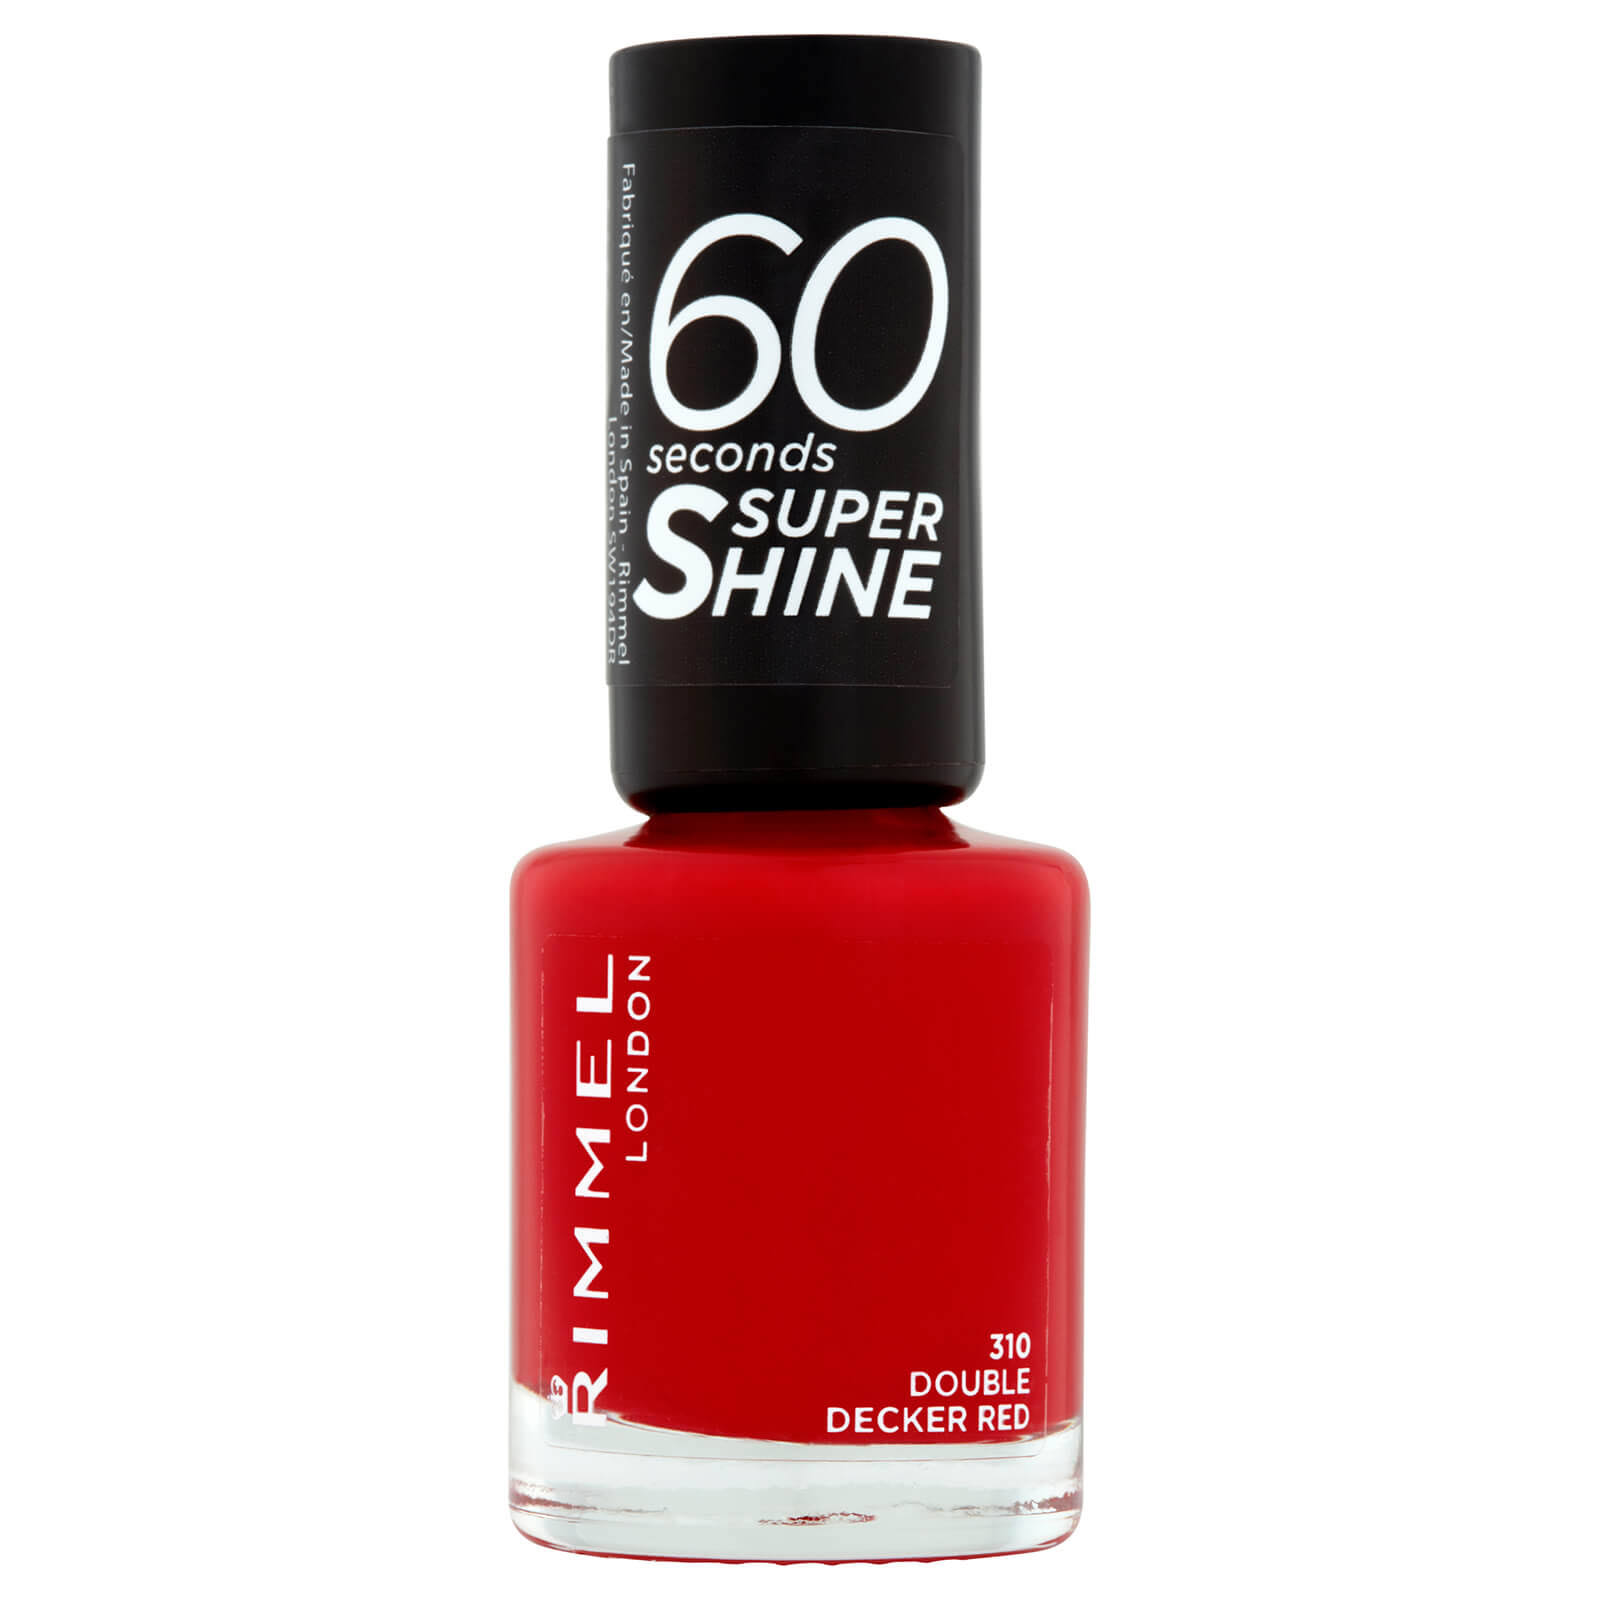 Rimmel London 60 Seconds Super Shine Nail Polish - Double Decker Red, 8ml